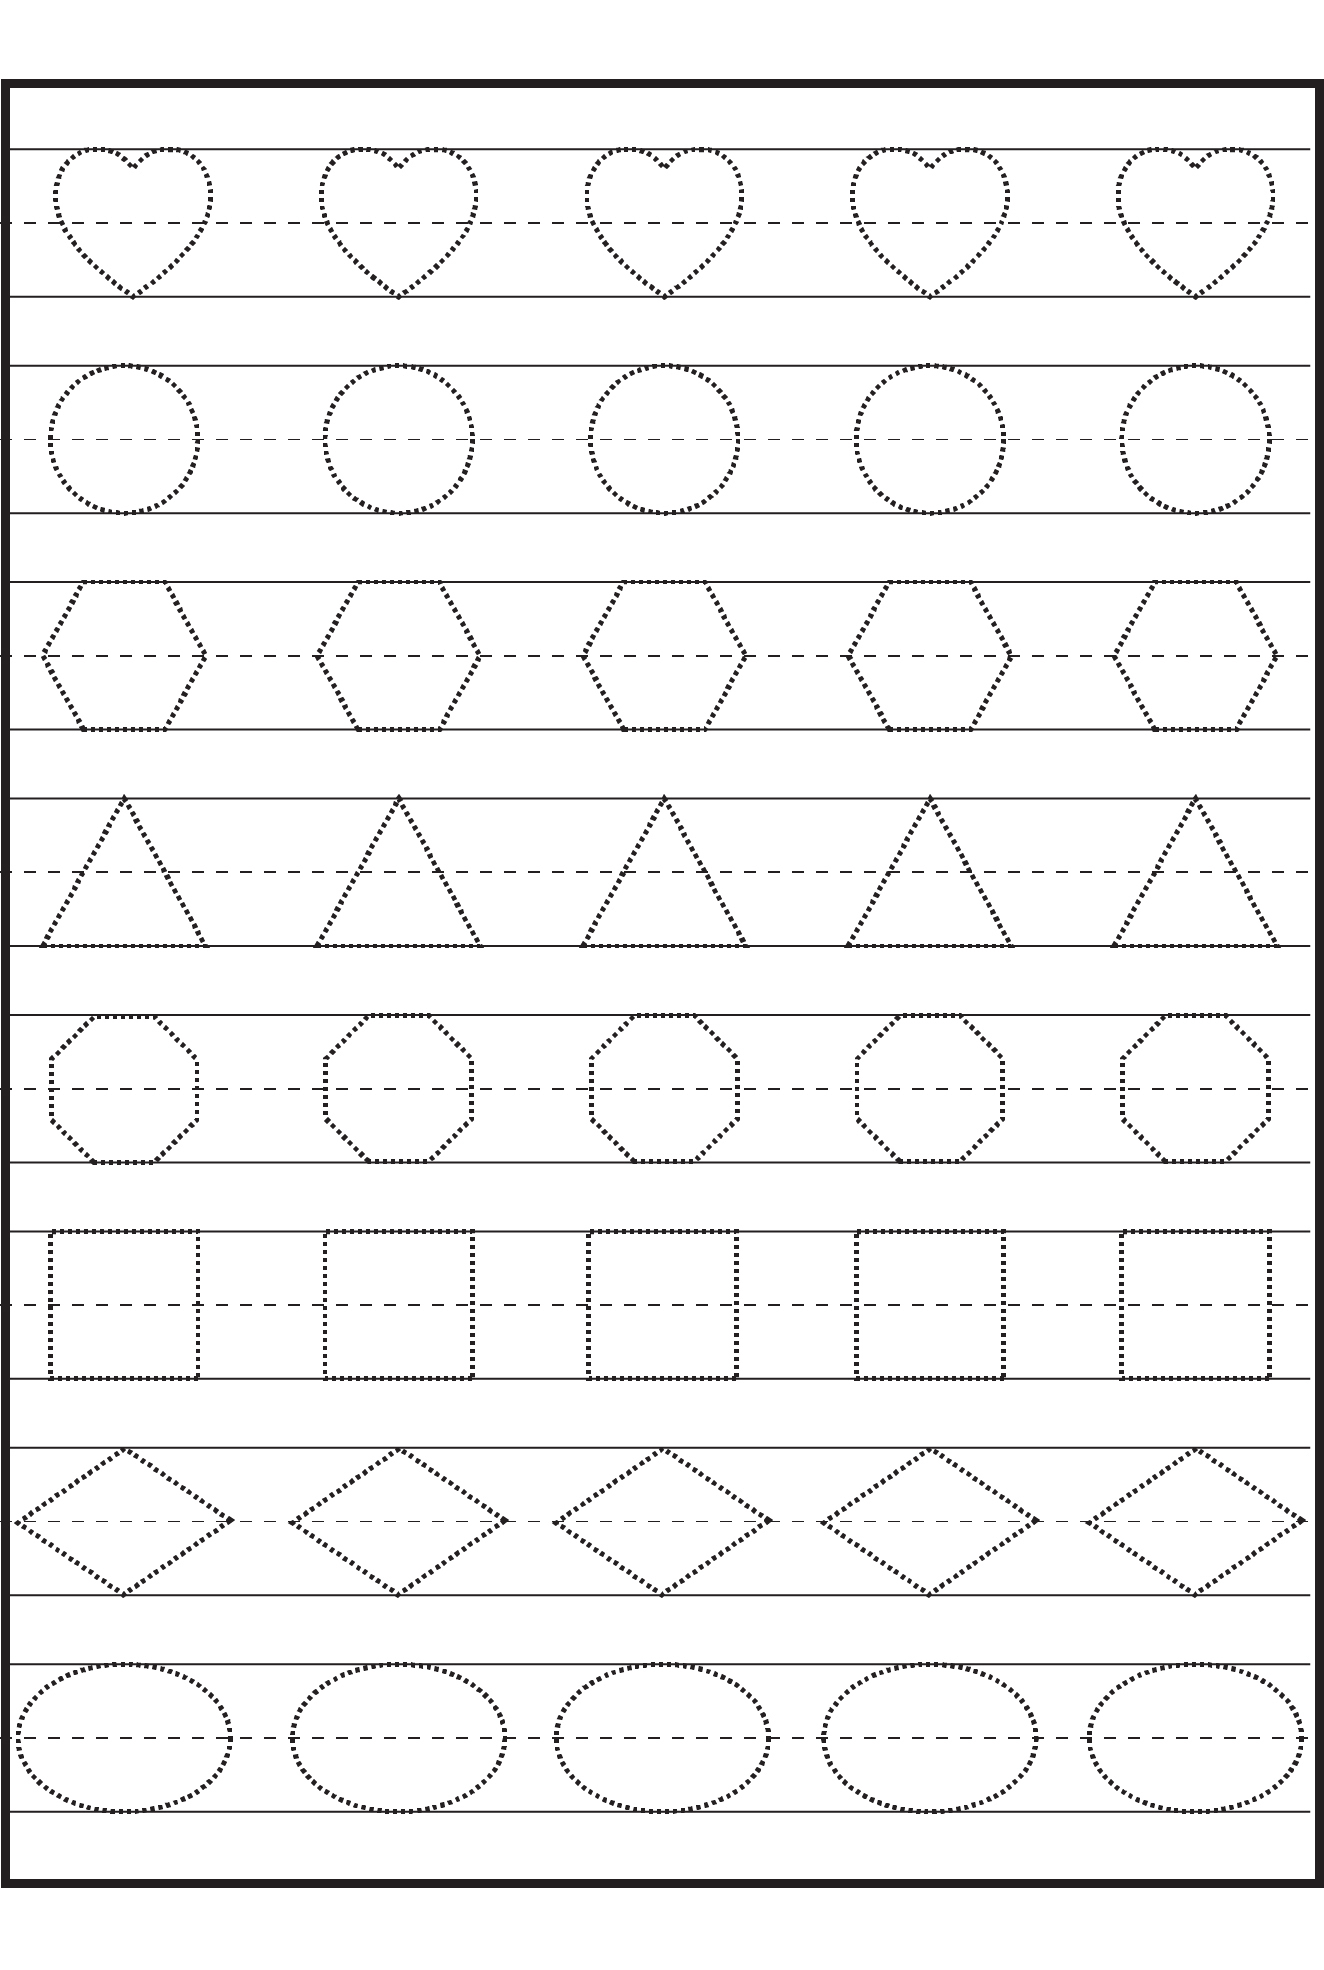 free-pdf-printable-tracing-shapes-kindergarten-preschool